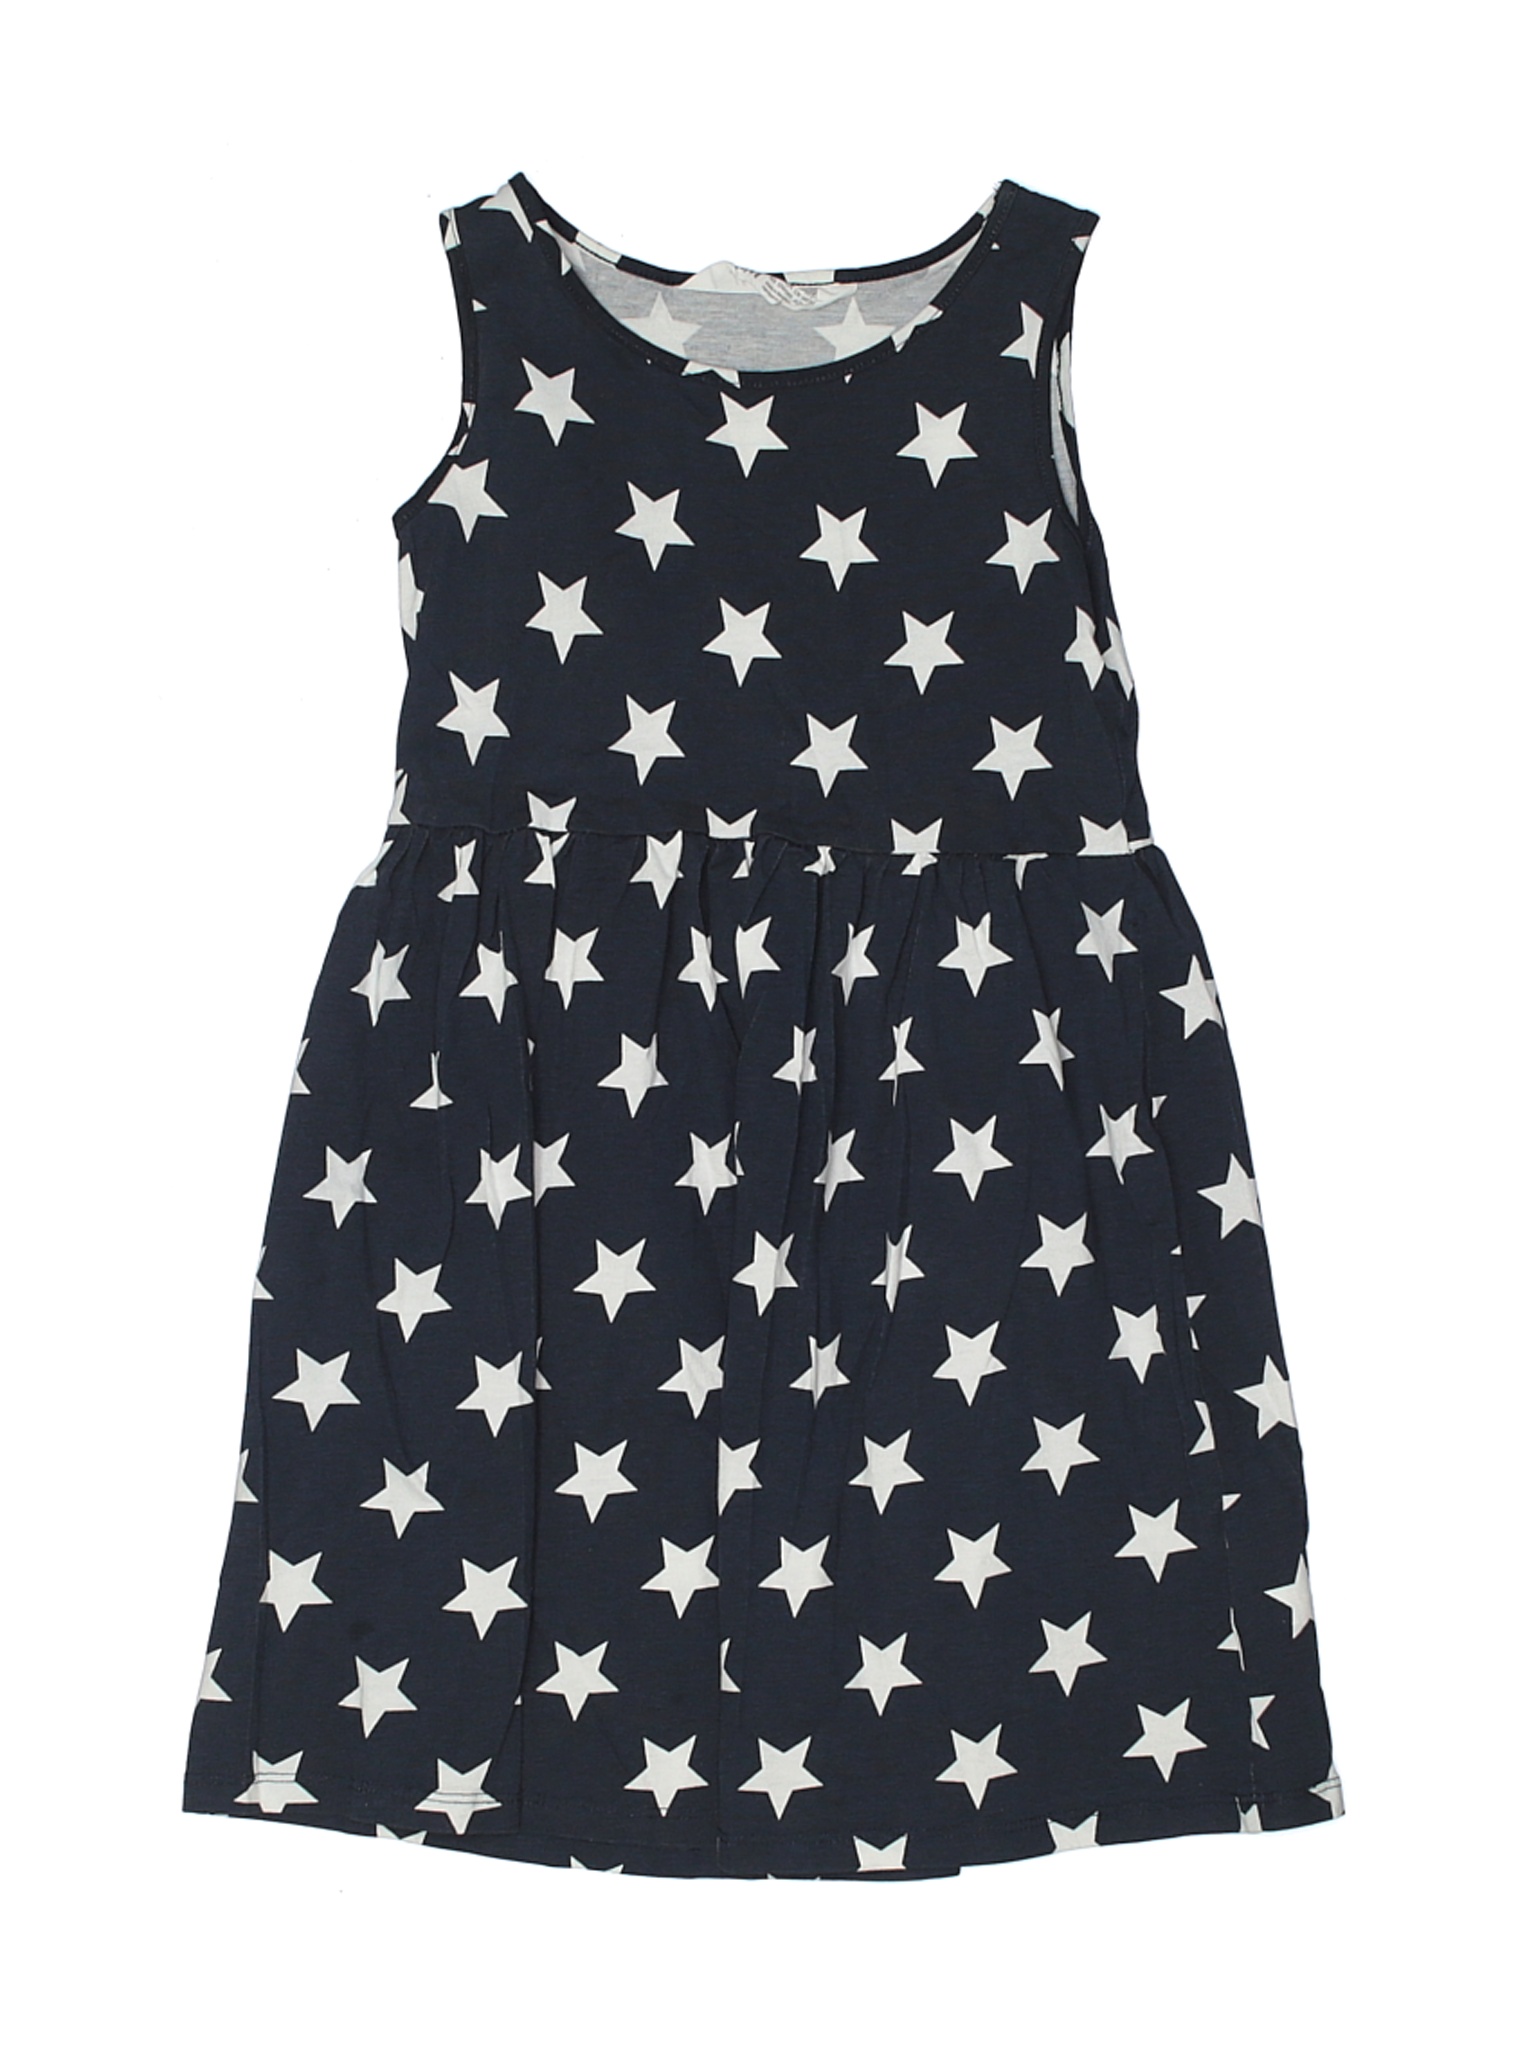 H&M Girls Black Dress 8 | eBay